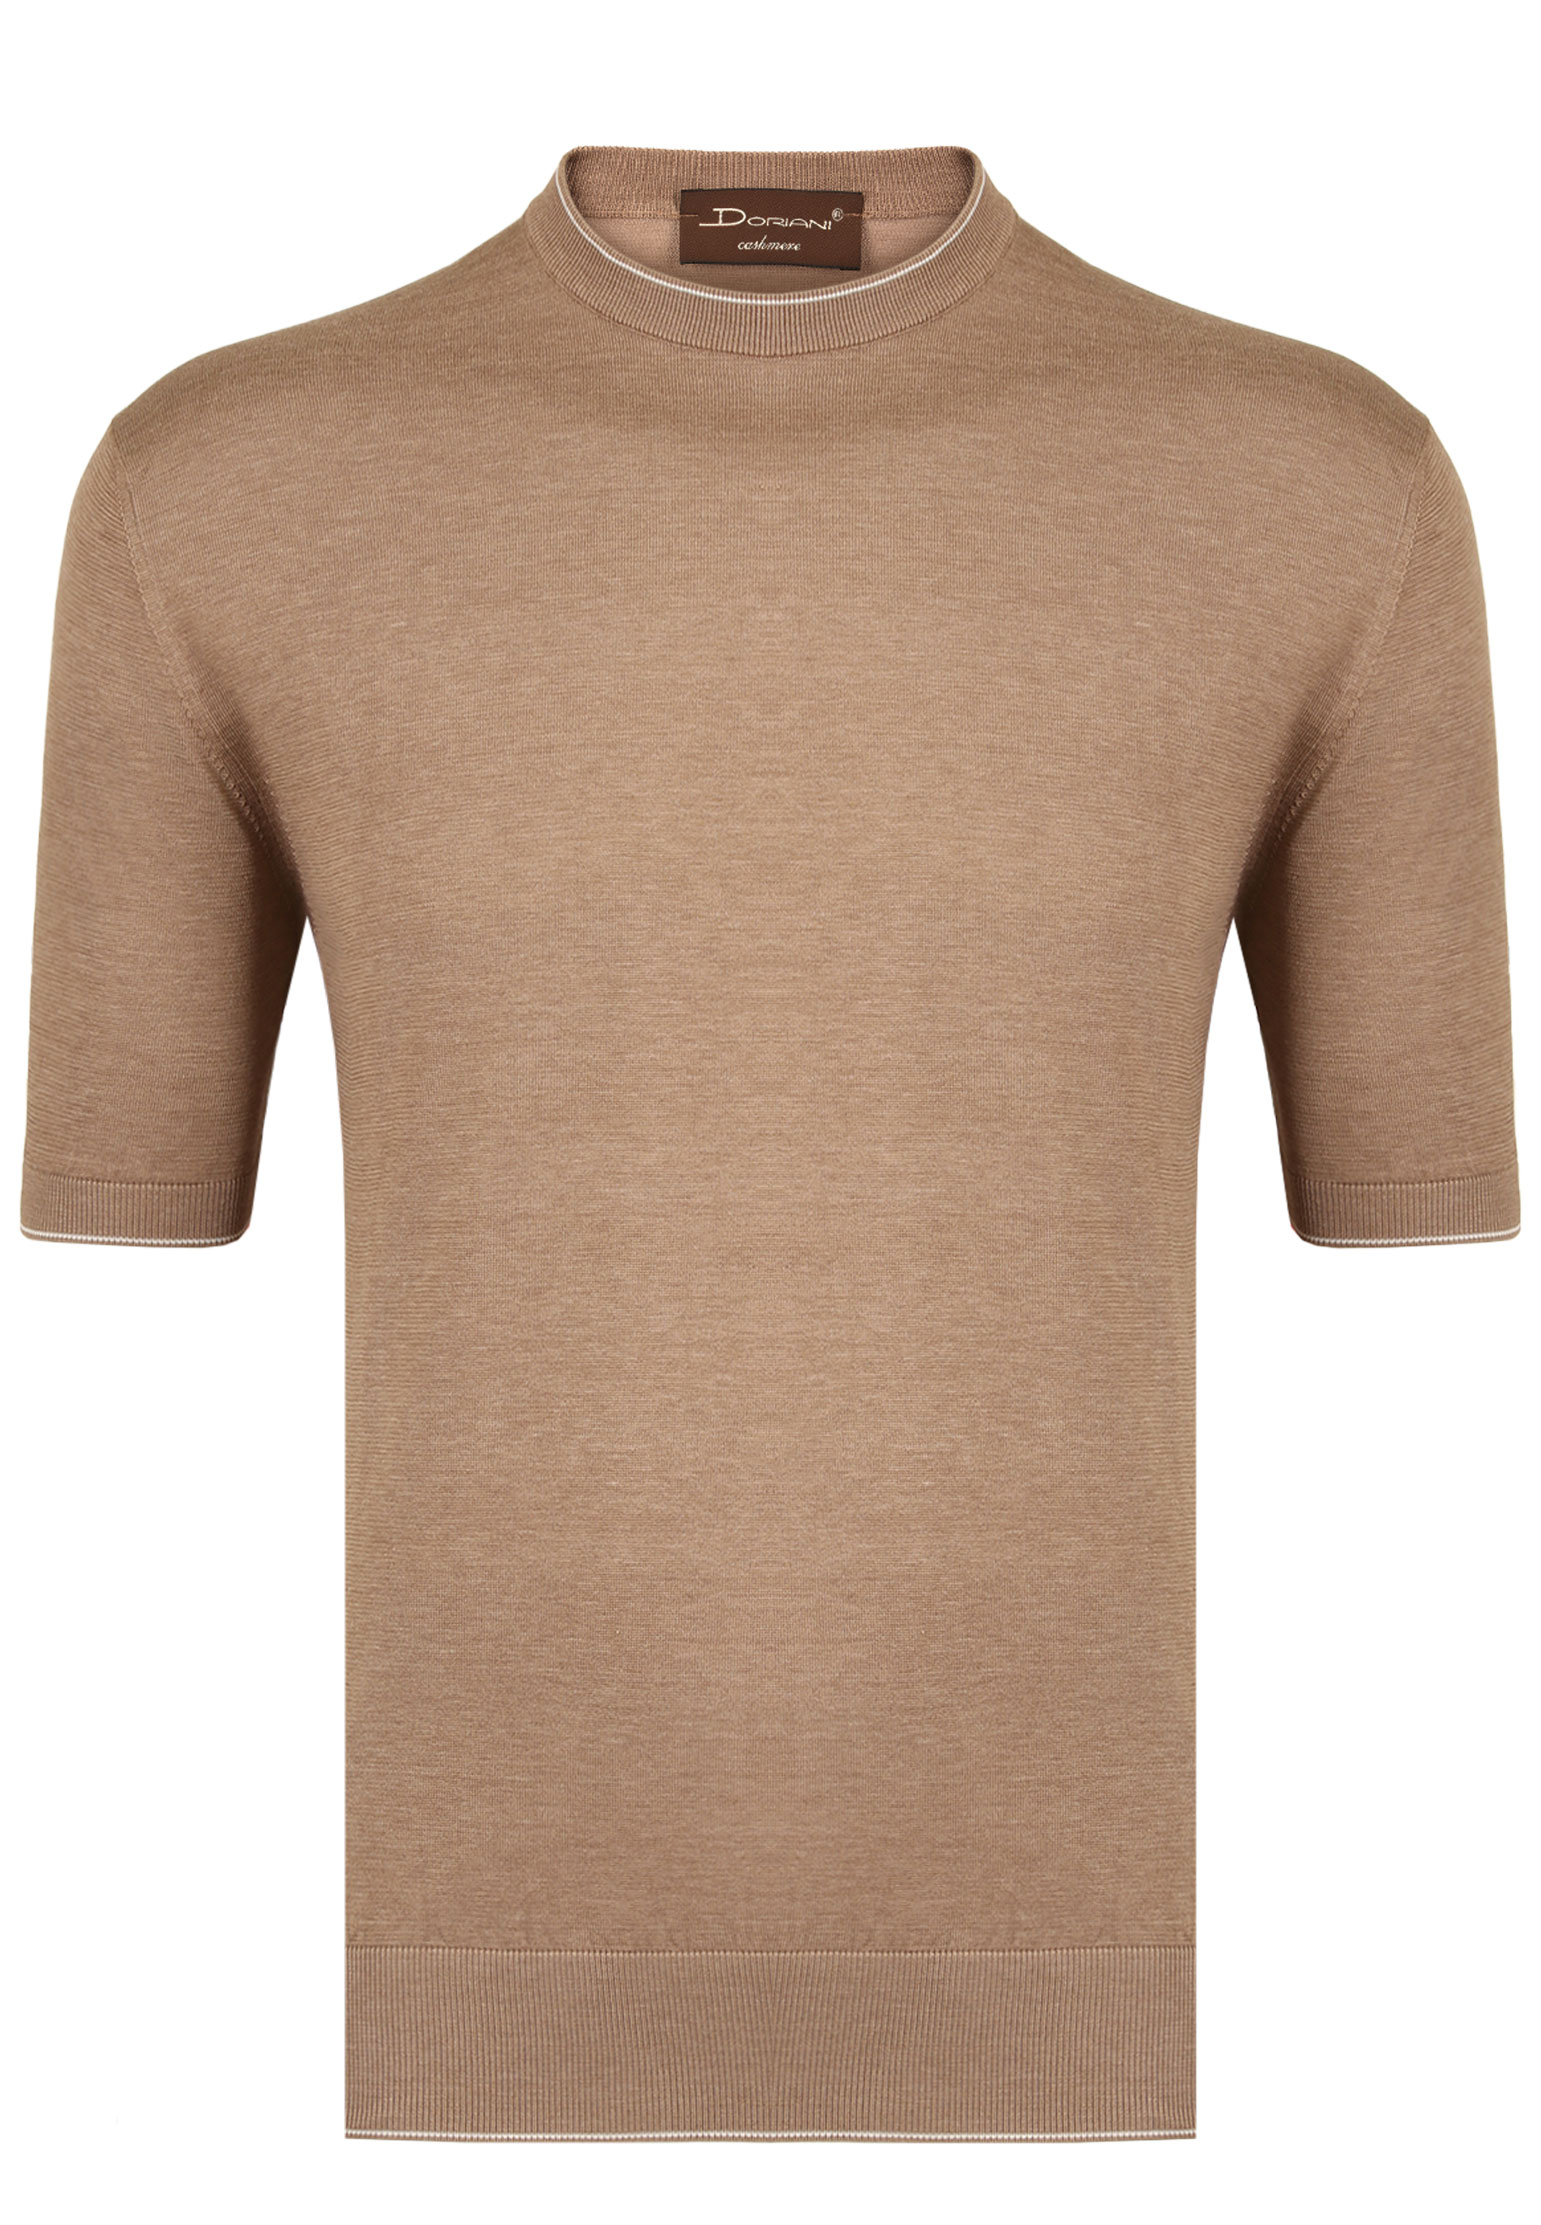 Пуловер DORIANI Бежевый, размер 48 178348 - фото 1